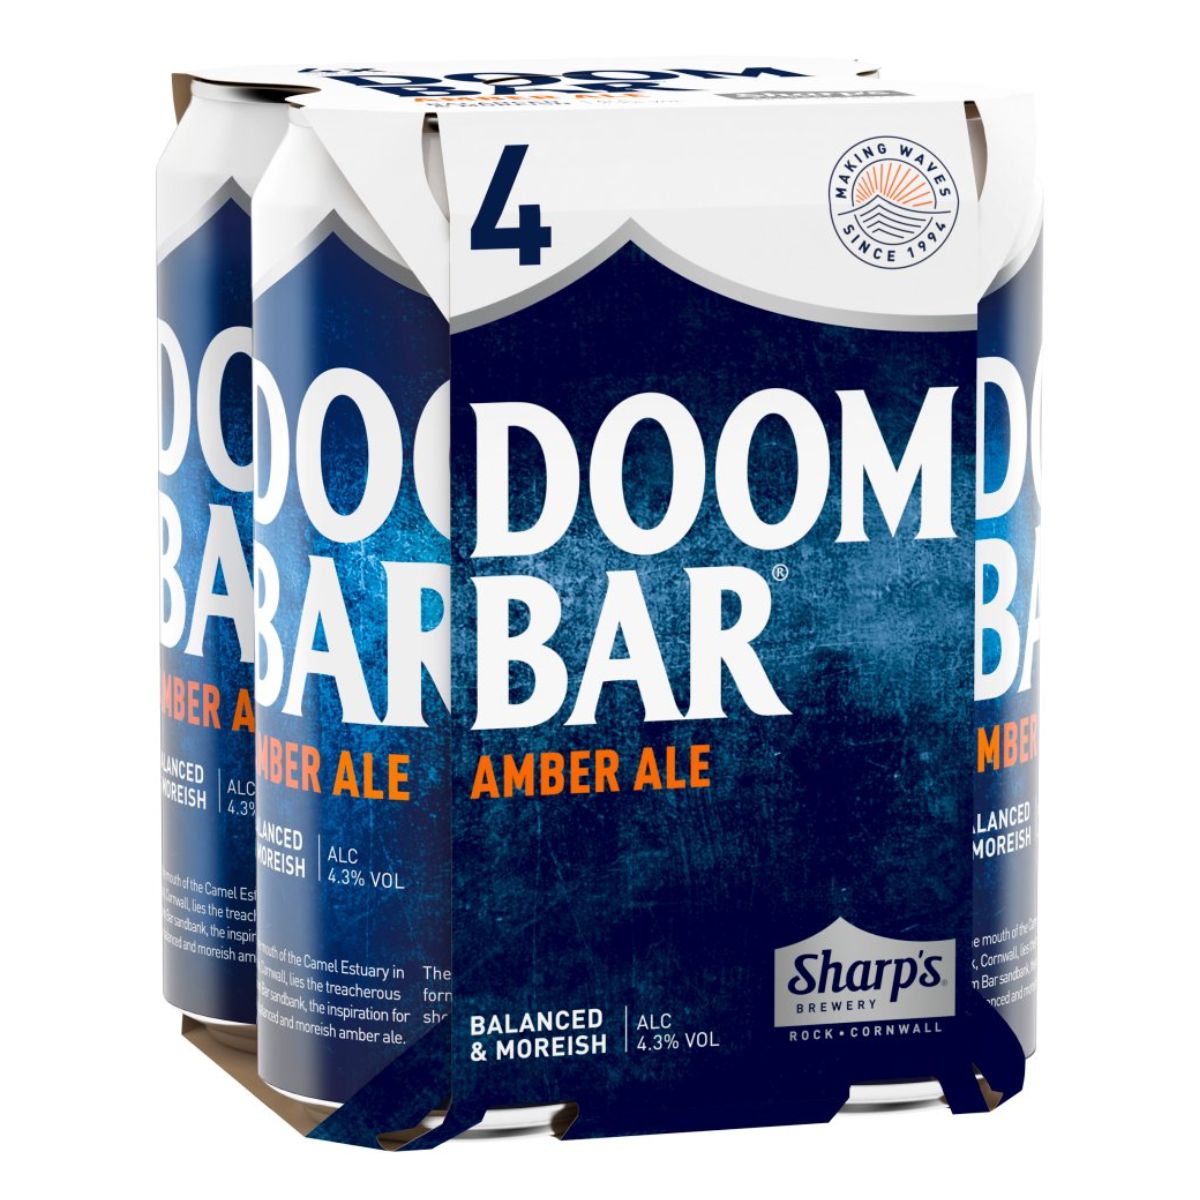 Doom Bar - Amber Ale (4.3% ABV) - 4 x 500ml - 4 pack.